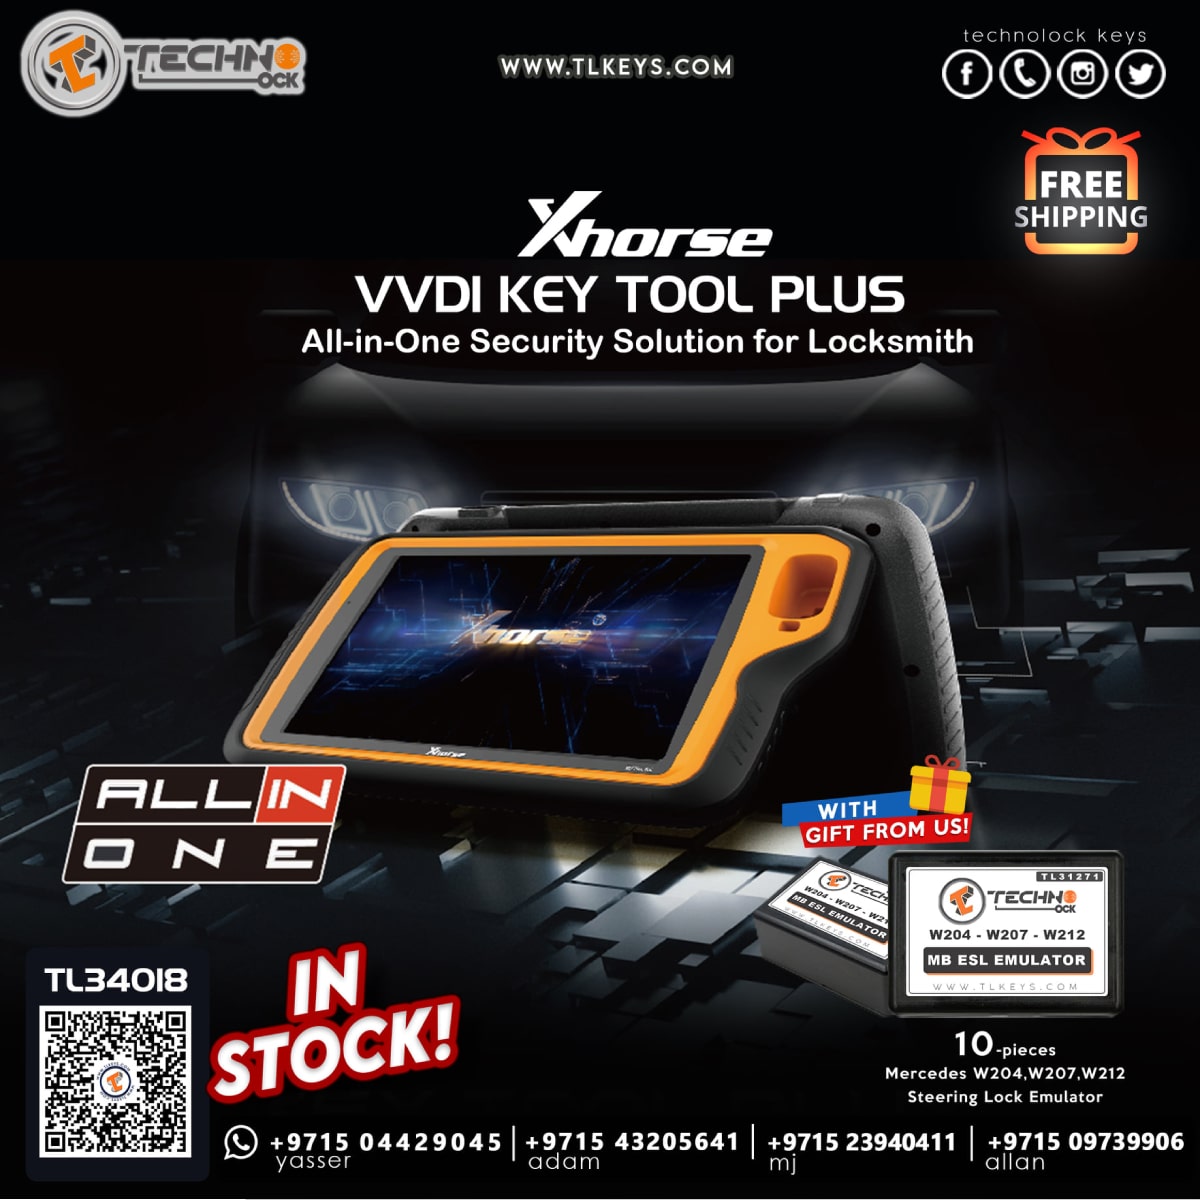 Xhorse VVDI Key Tool Plus Pad Device &10 Piece Mercedes Benz ESL ELV Emulator